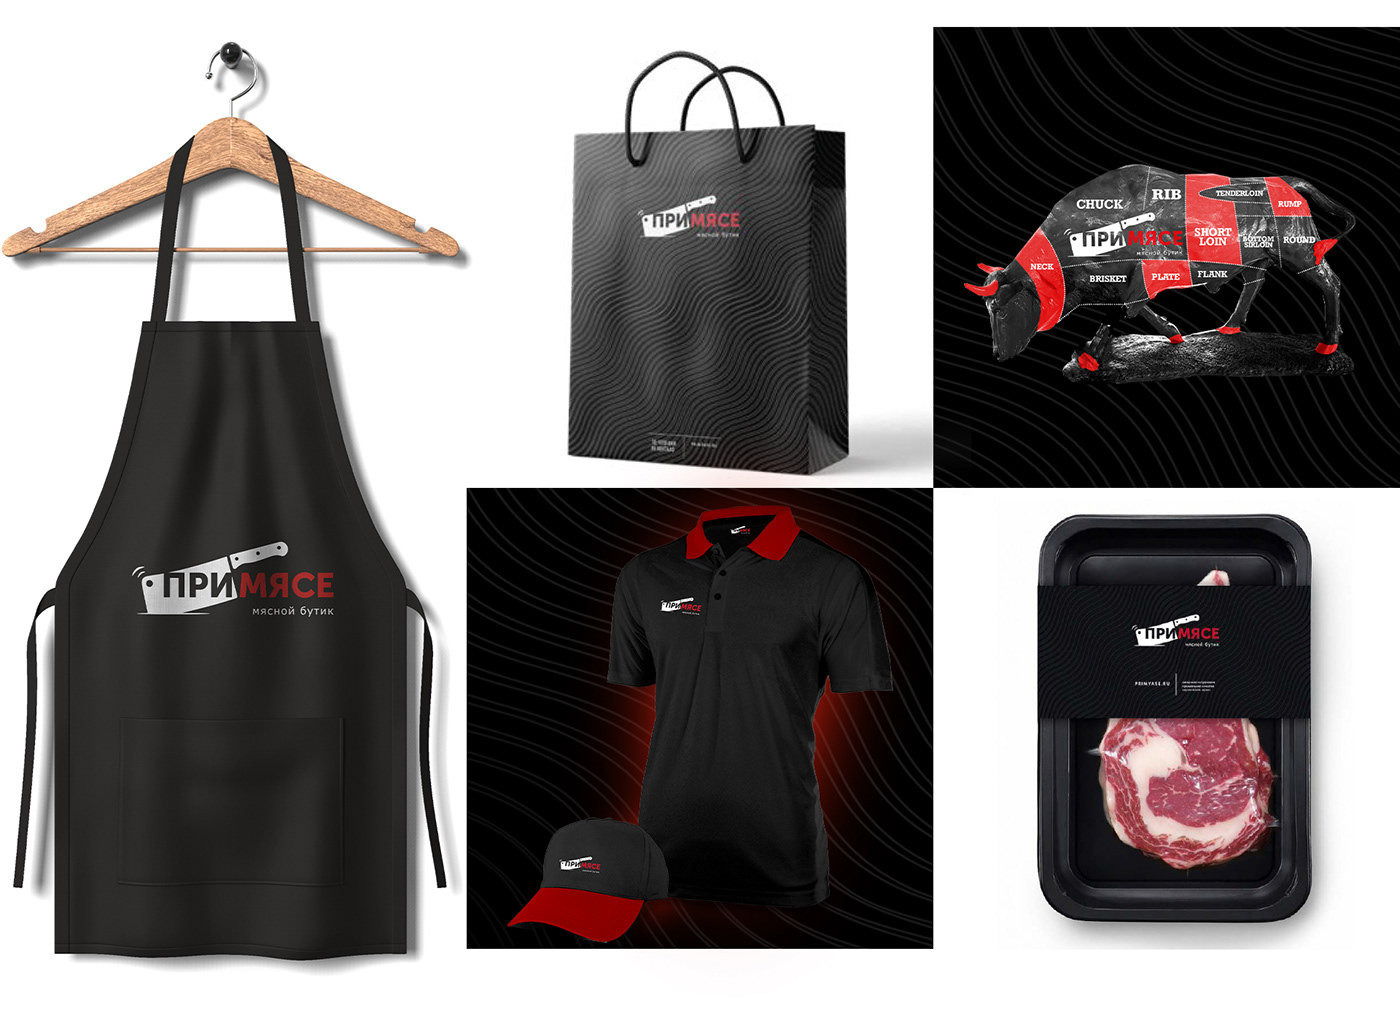 brand identity brandbook branding  butcher shop Packaging premium meat visual identity